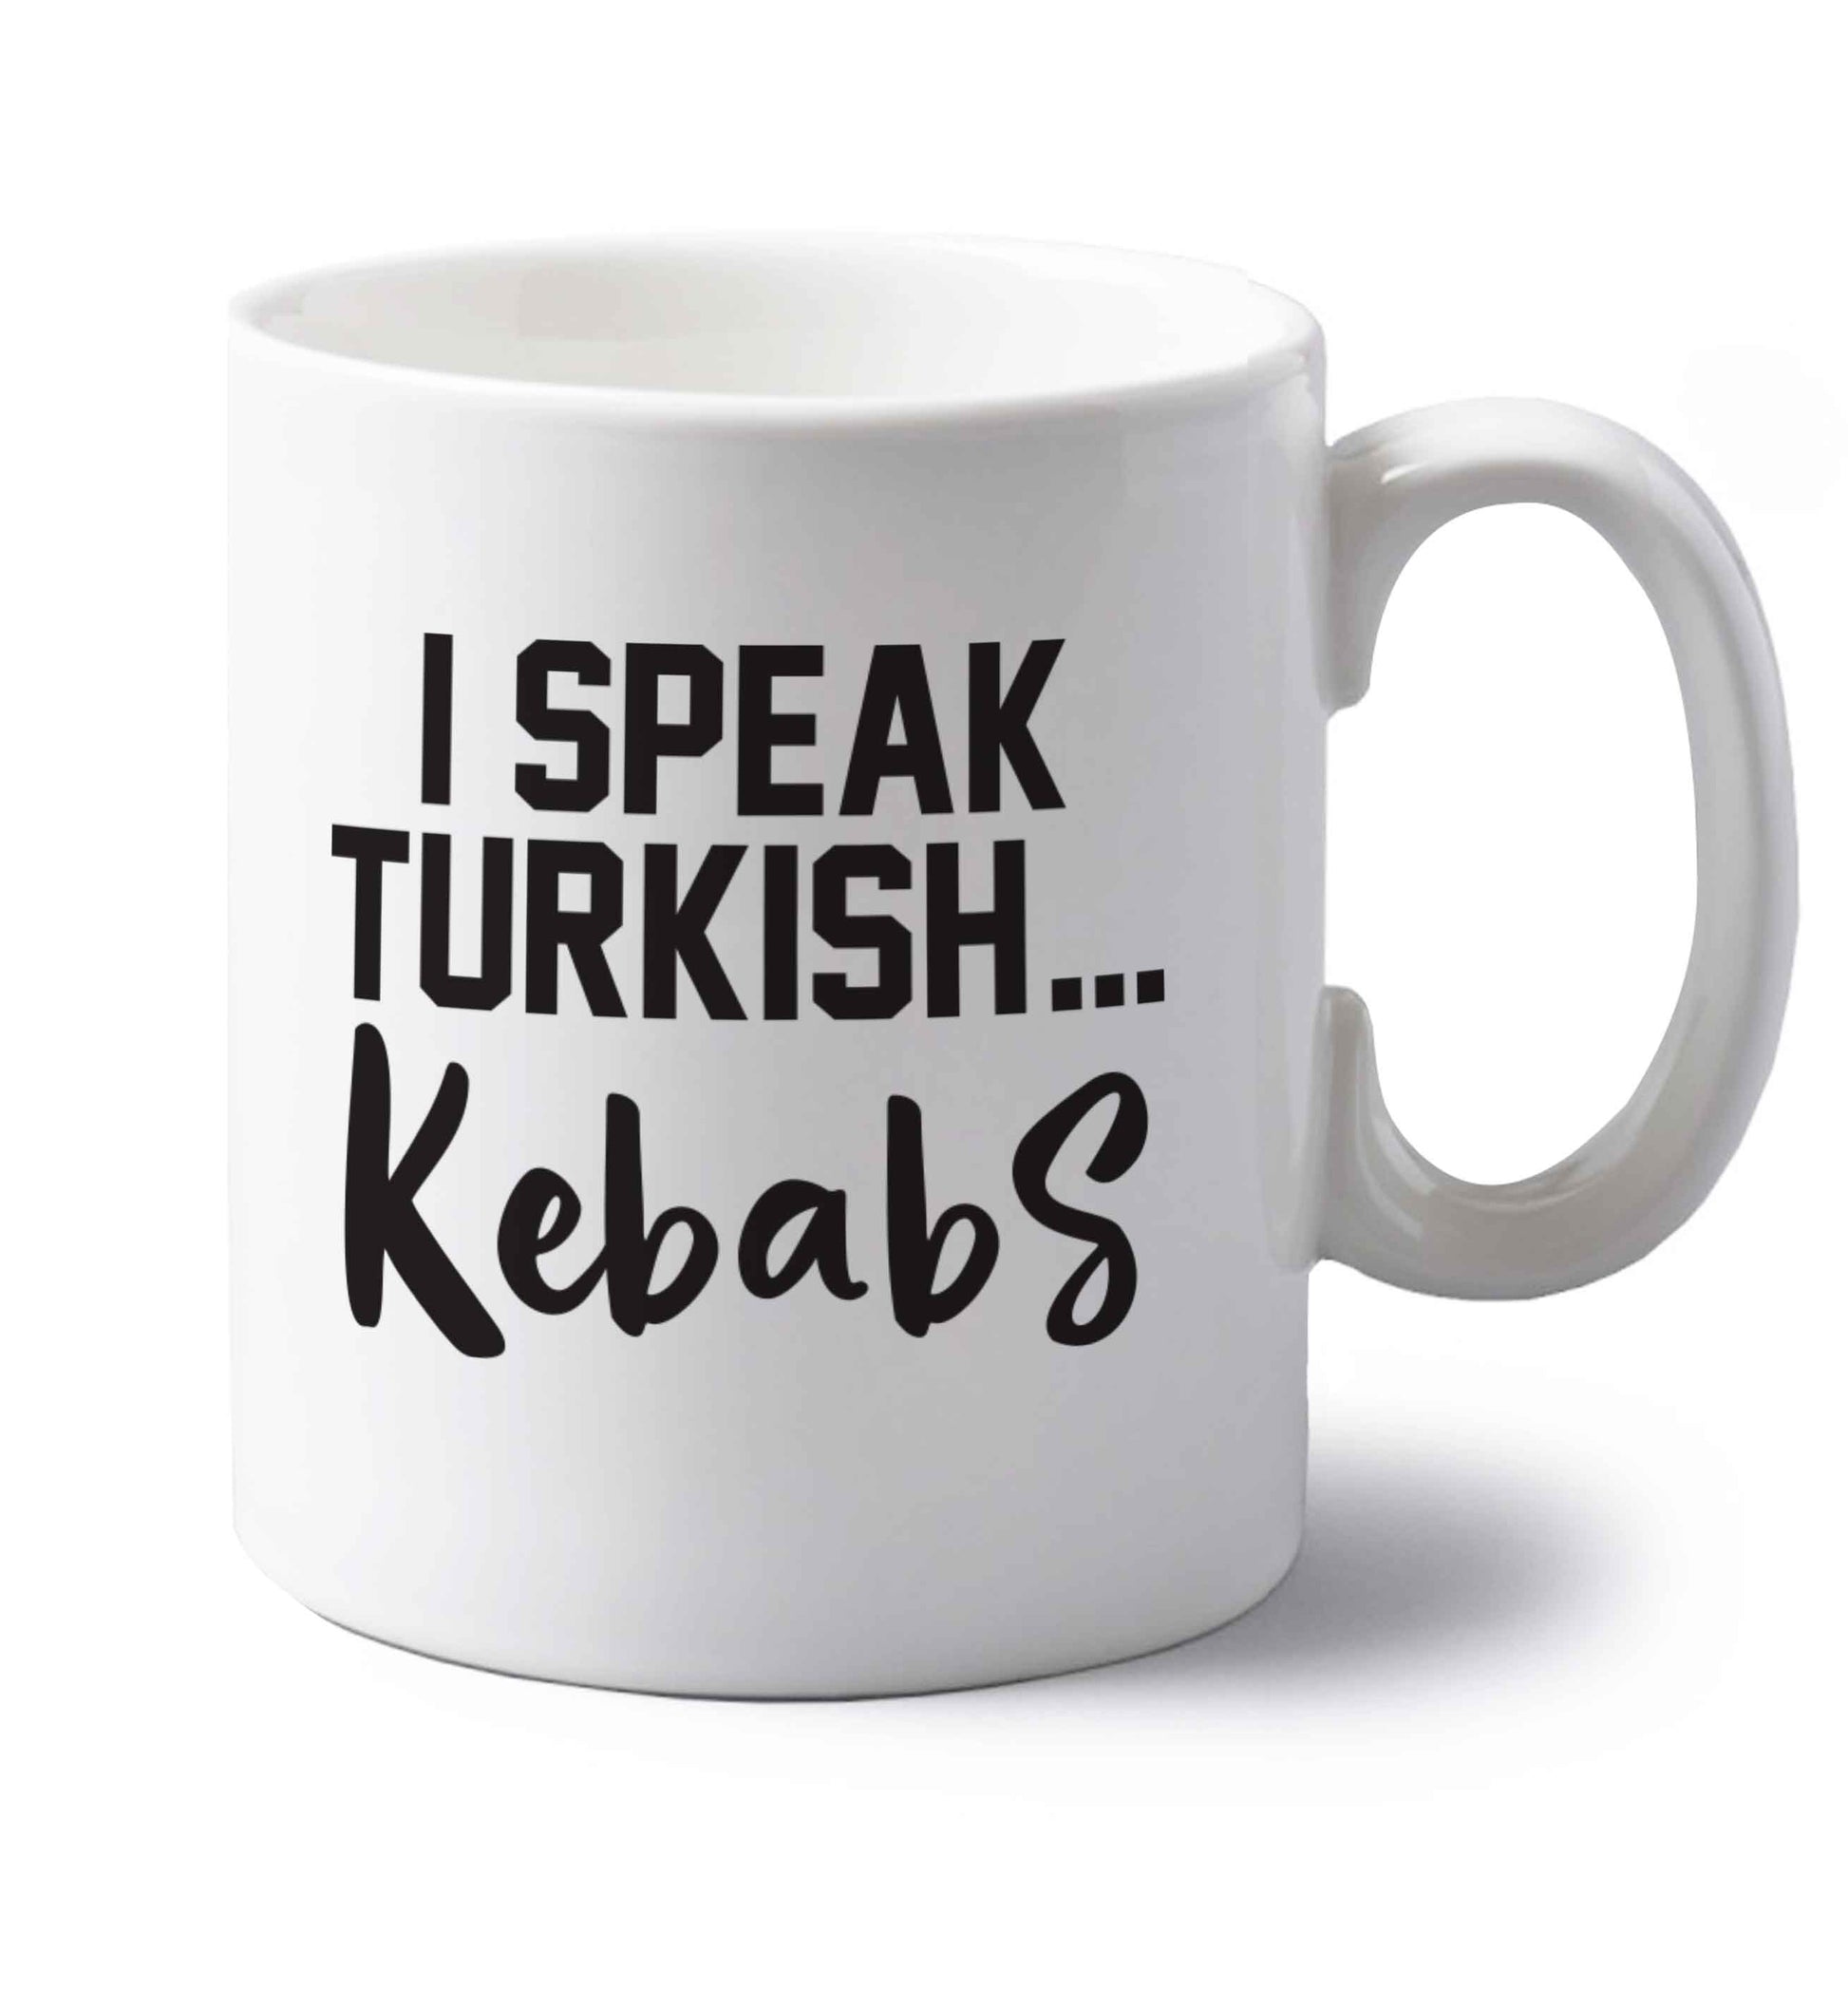 I speak Turkish...kebabs left handed white ceramic mug 